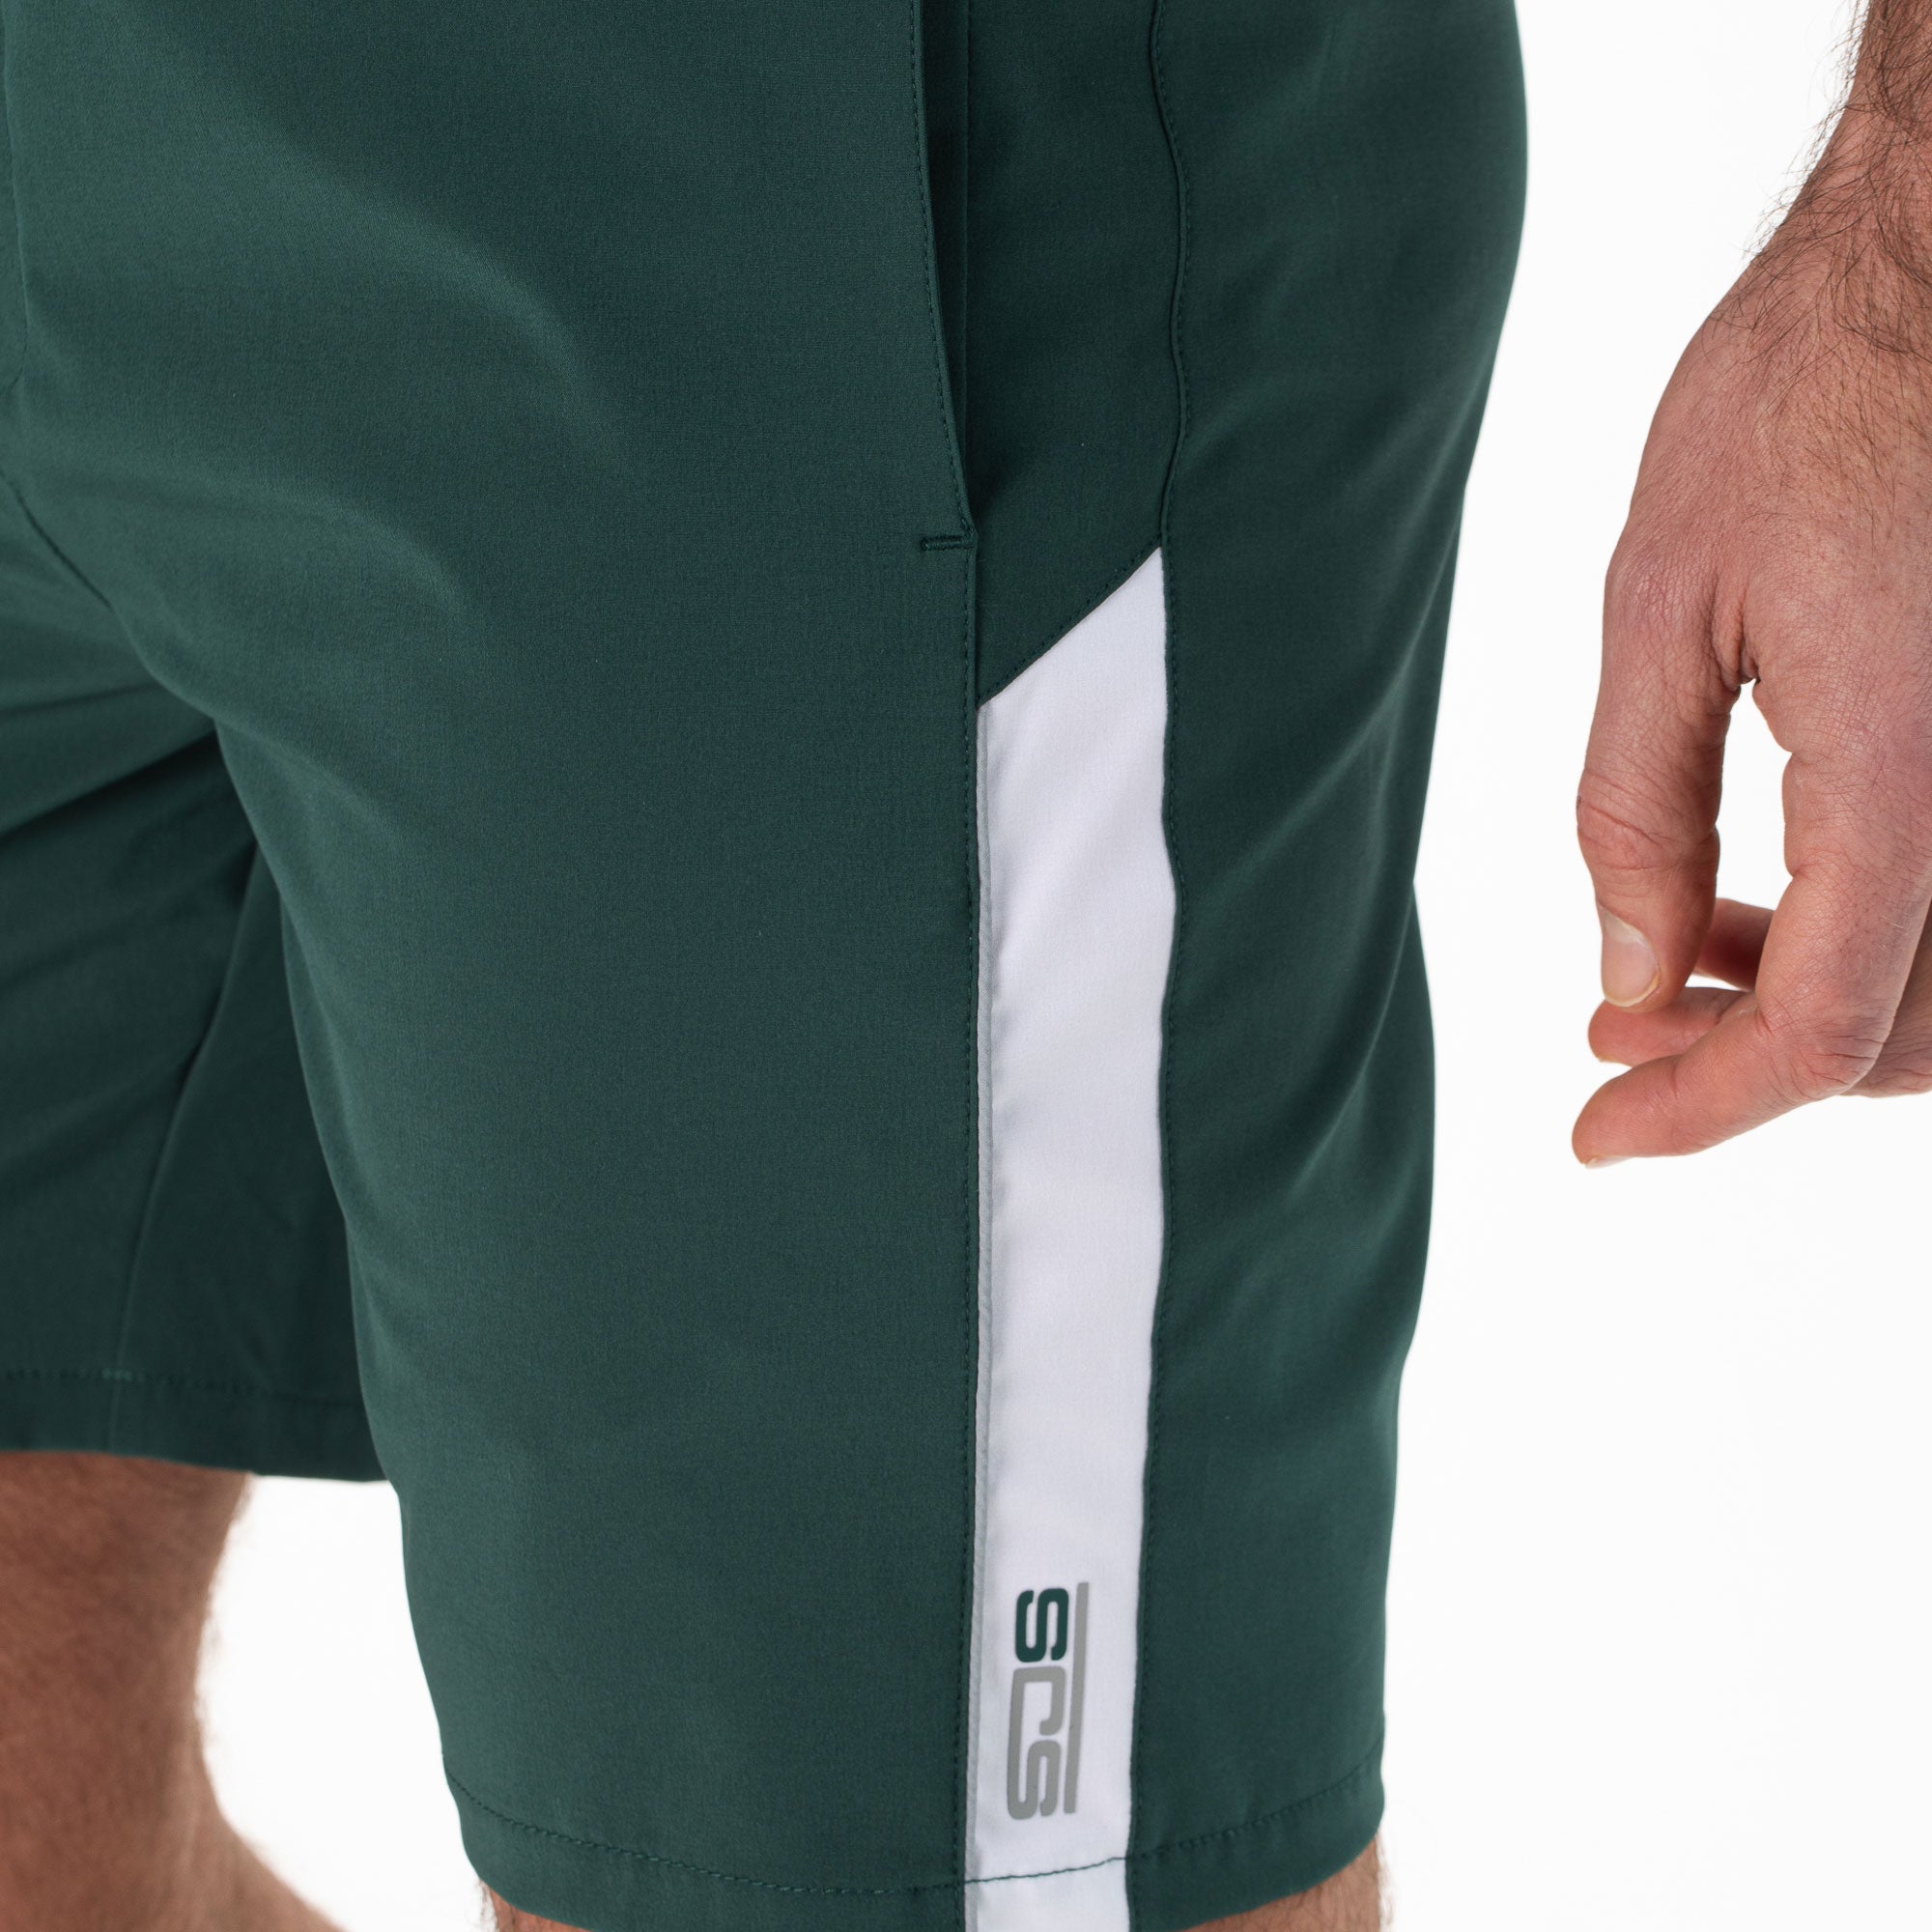 Sjeng Sports Evron Men's Tennis Shorts - Green (3)